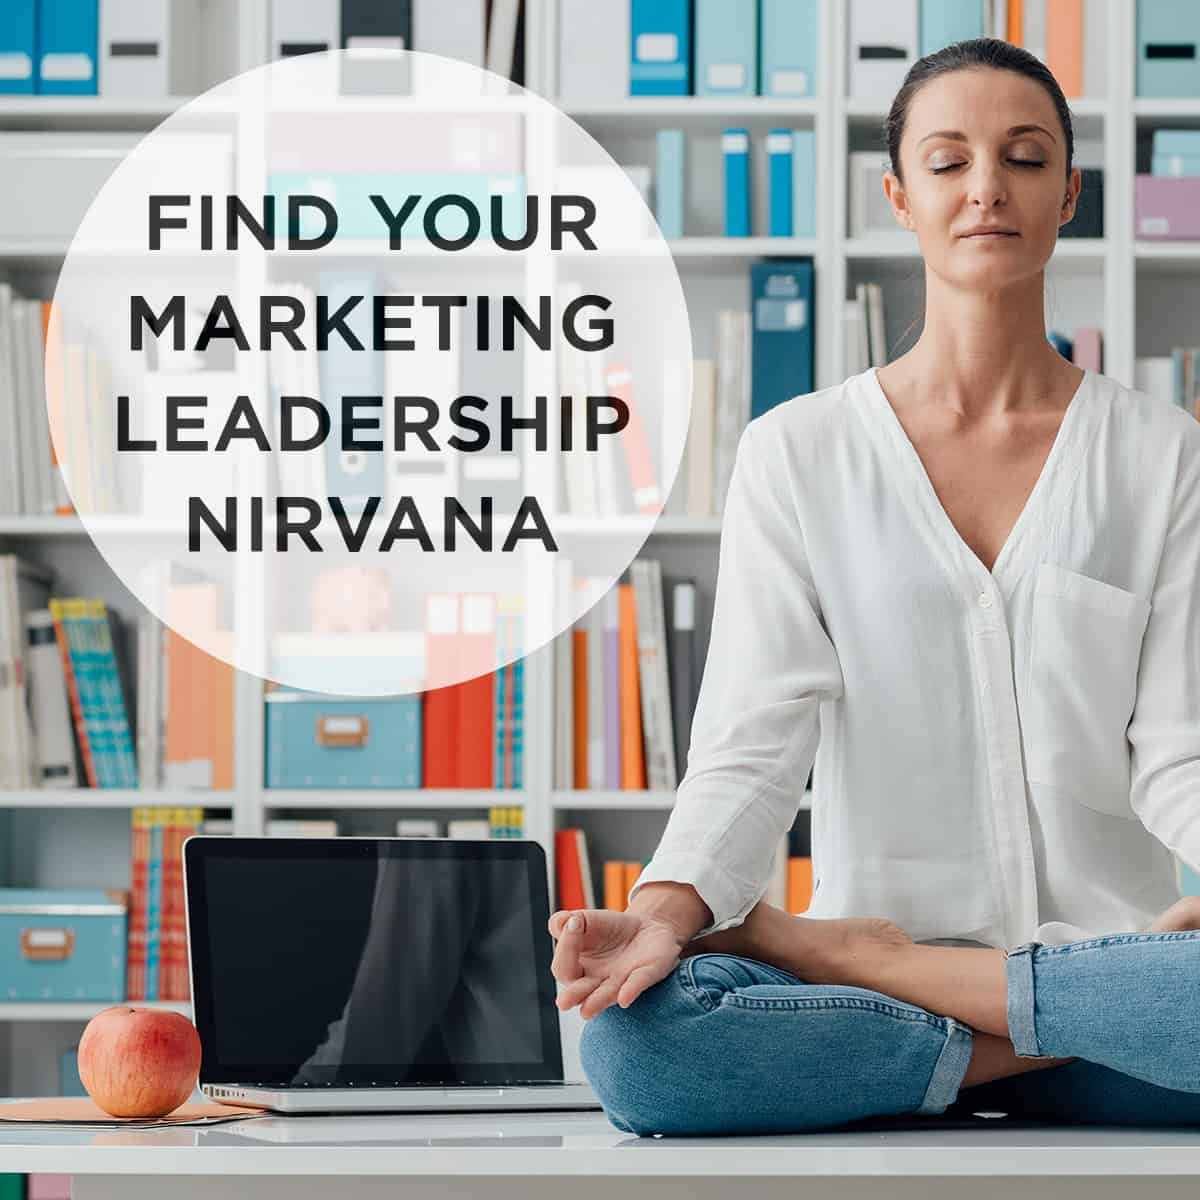 Find your Marketing Leadership Nirvana